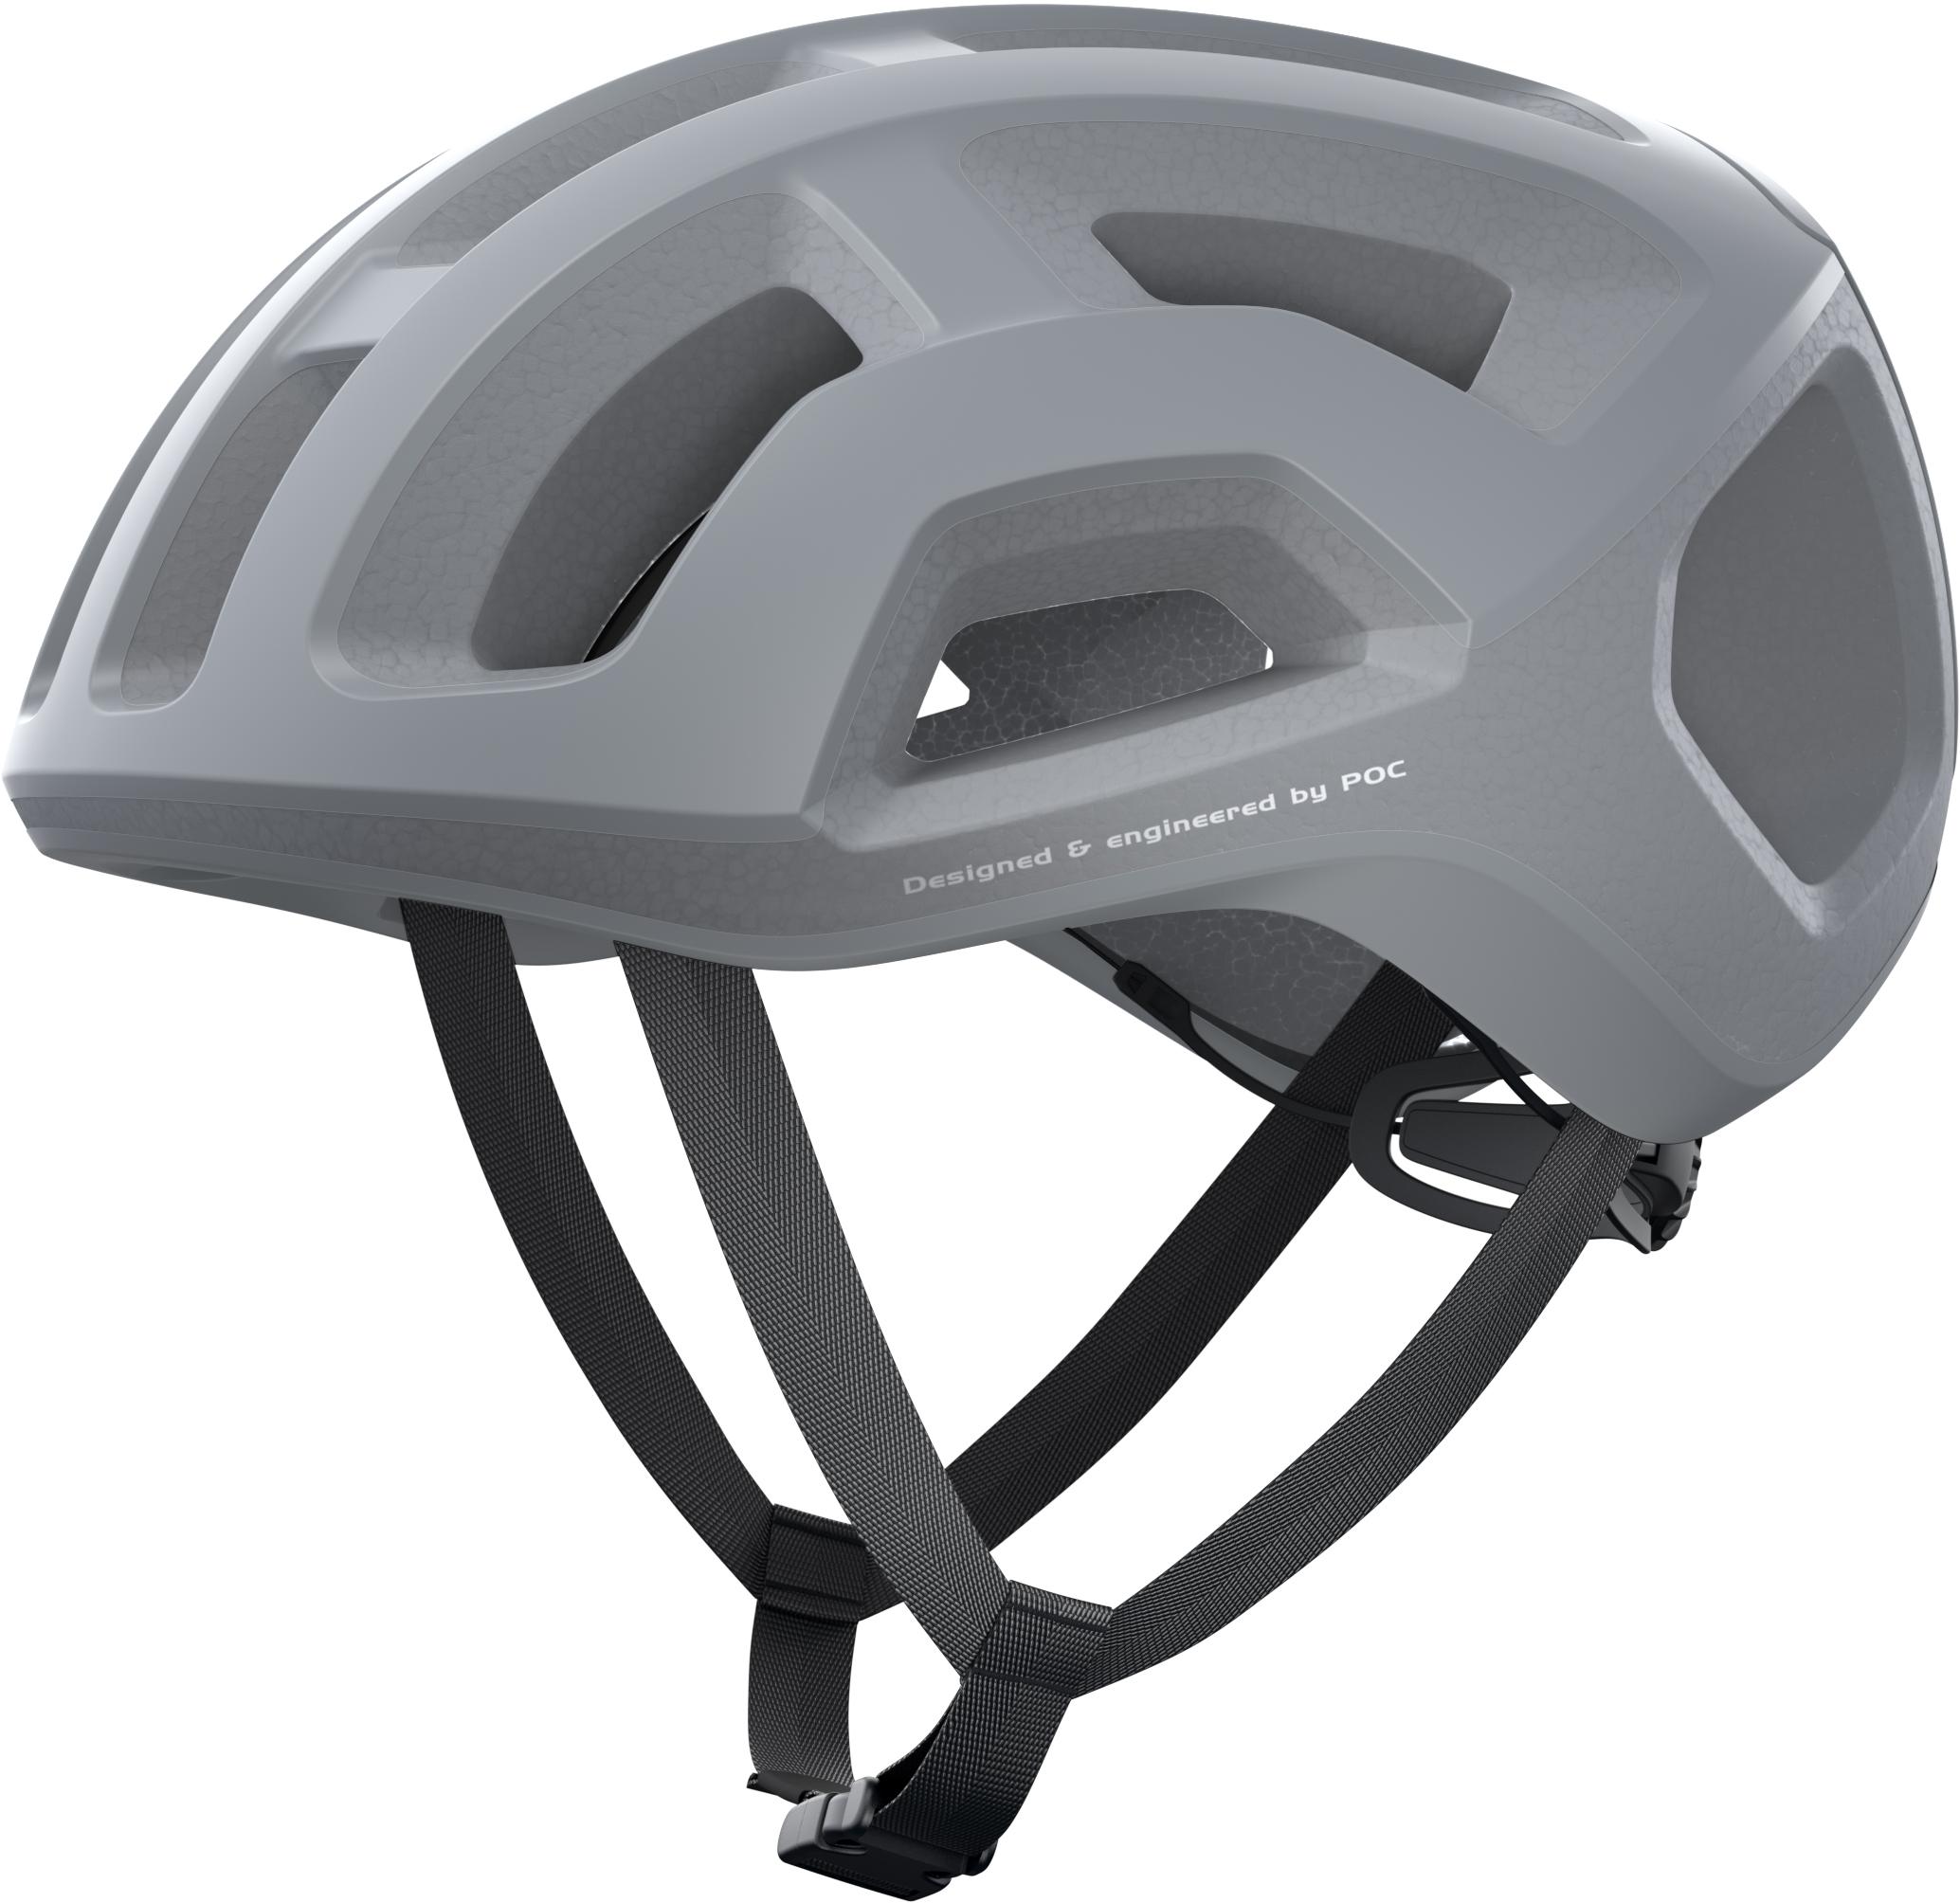 Poc Ventral Lite Road Cycling Helmet - Granite Grey Matt